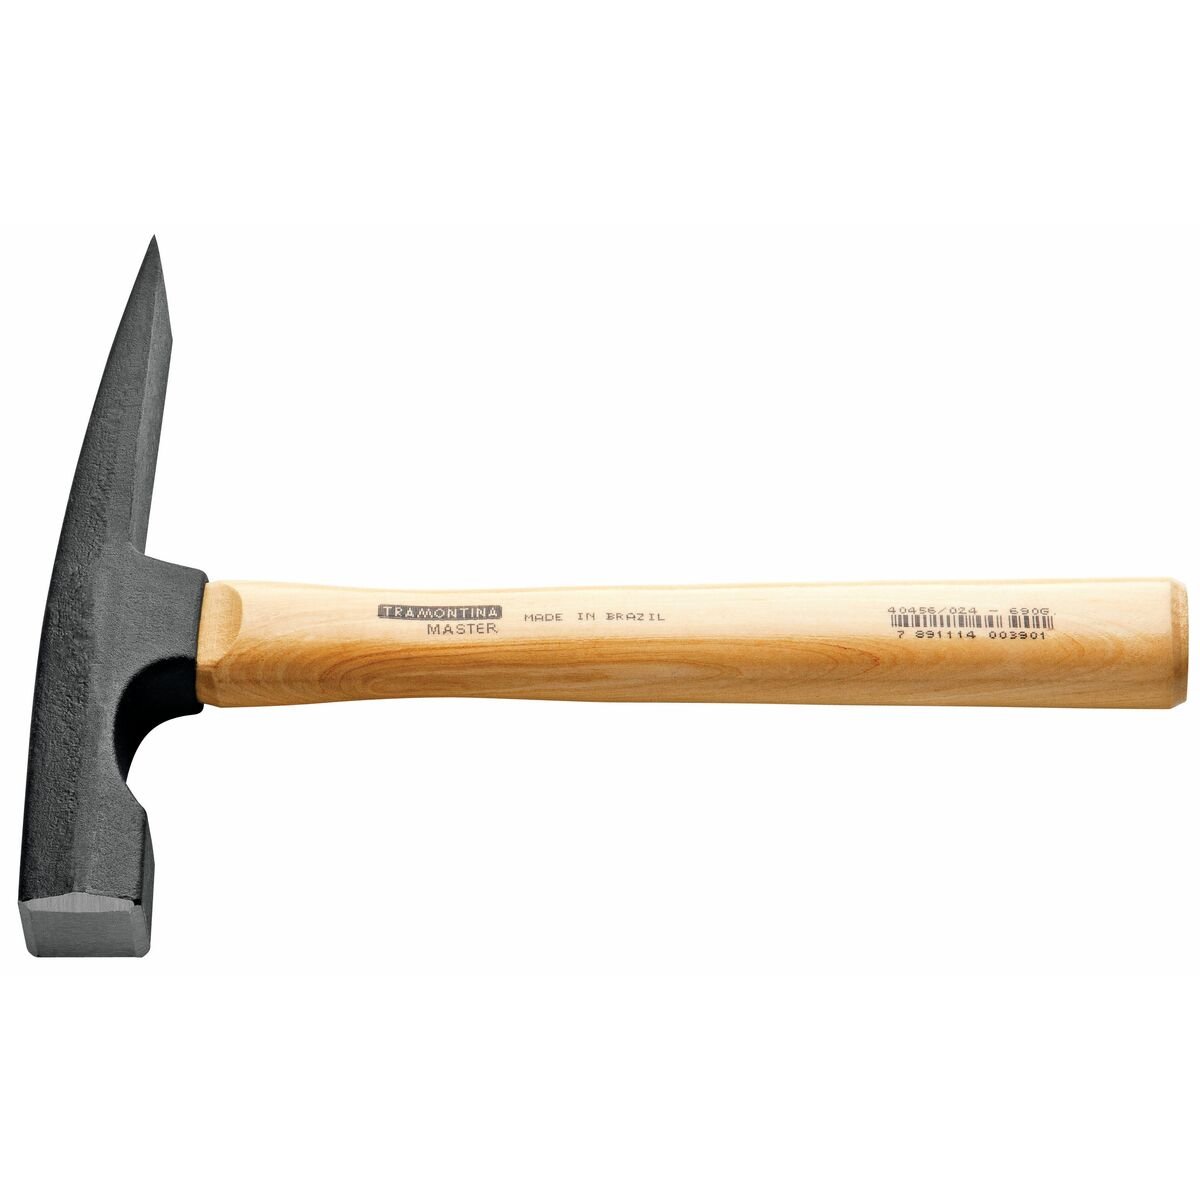 Tramontina MASTER Hardwood Handle 500 g Brick Hammer